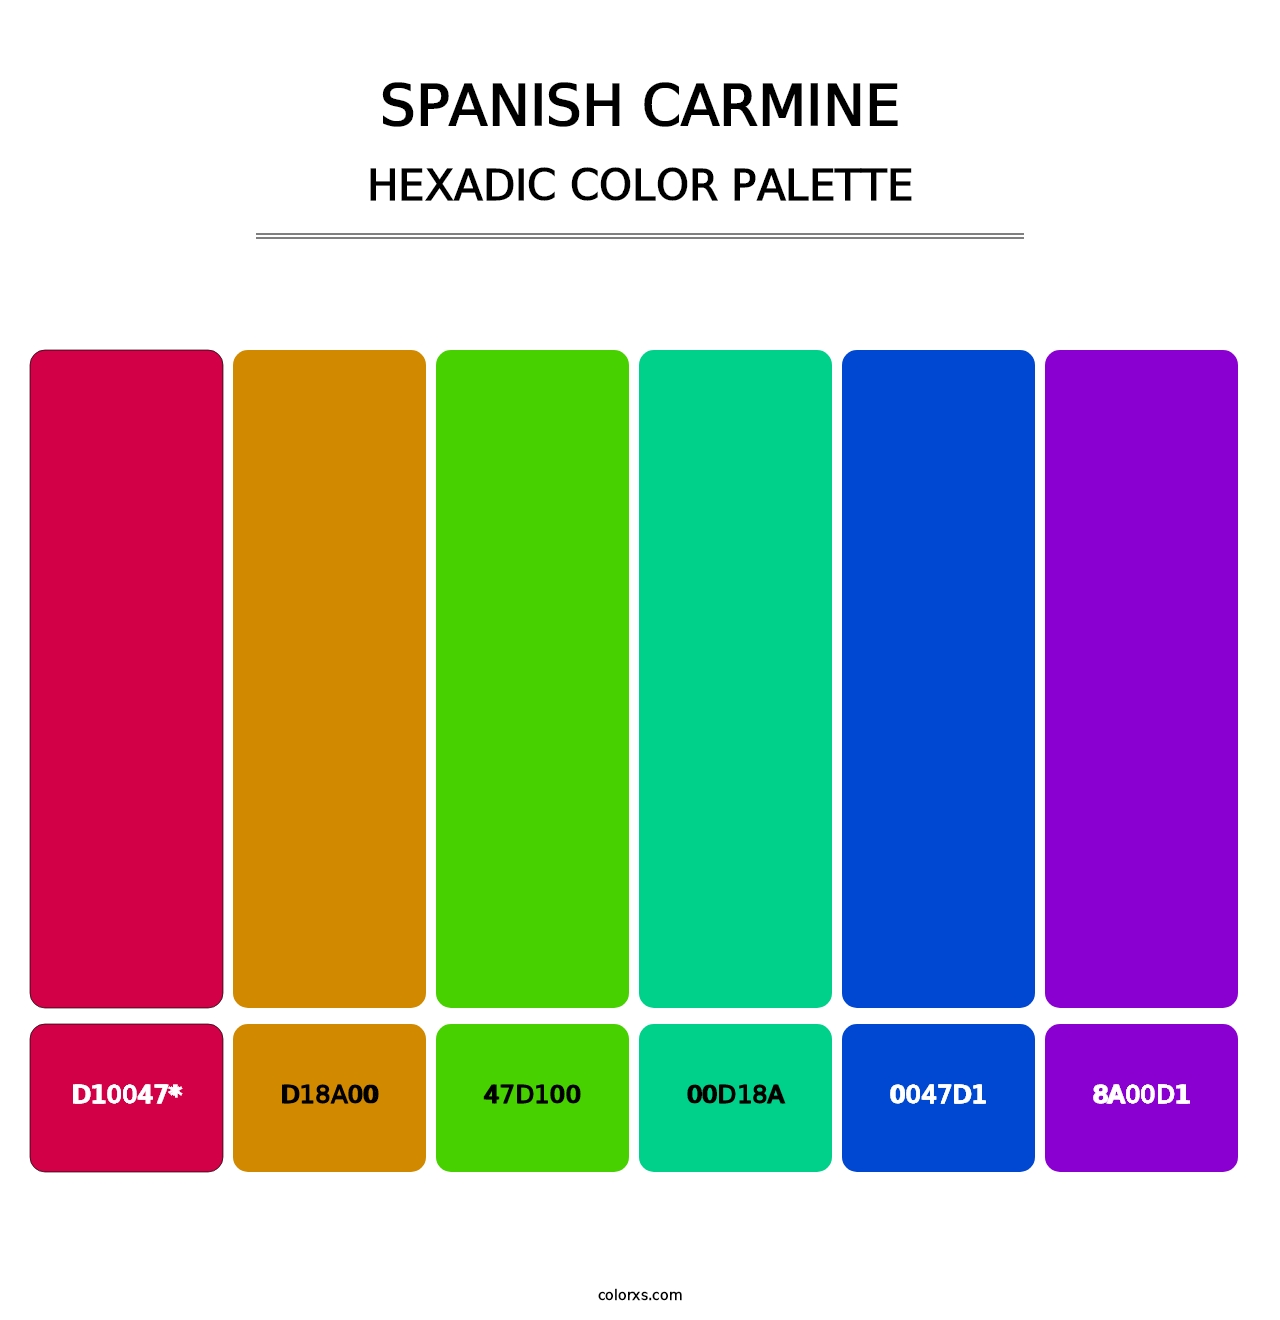 Spanish Carmine - Hexadic Color Palette